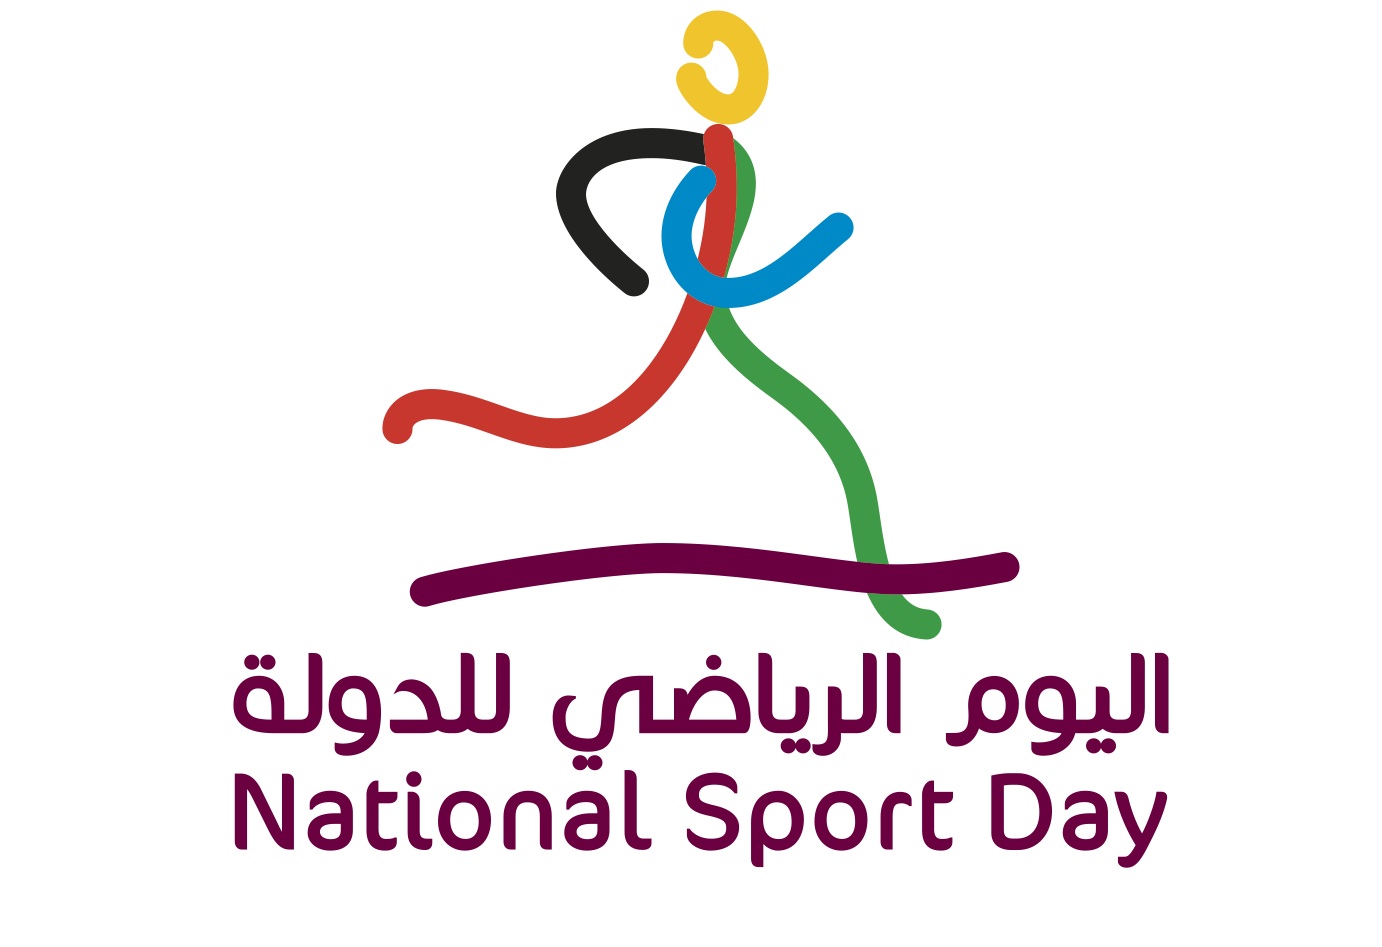 QATAR NATIONAL DAY OF SPORT logo